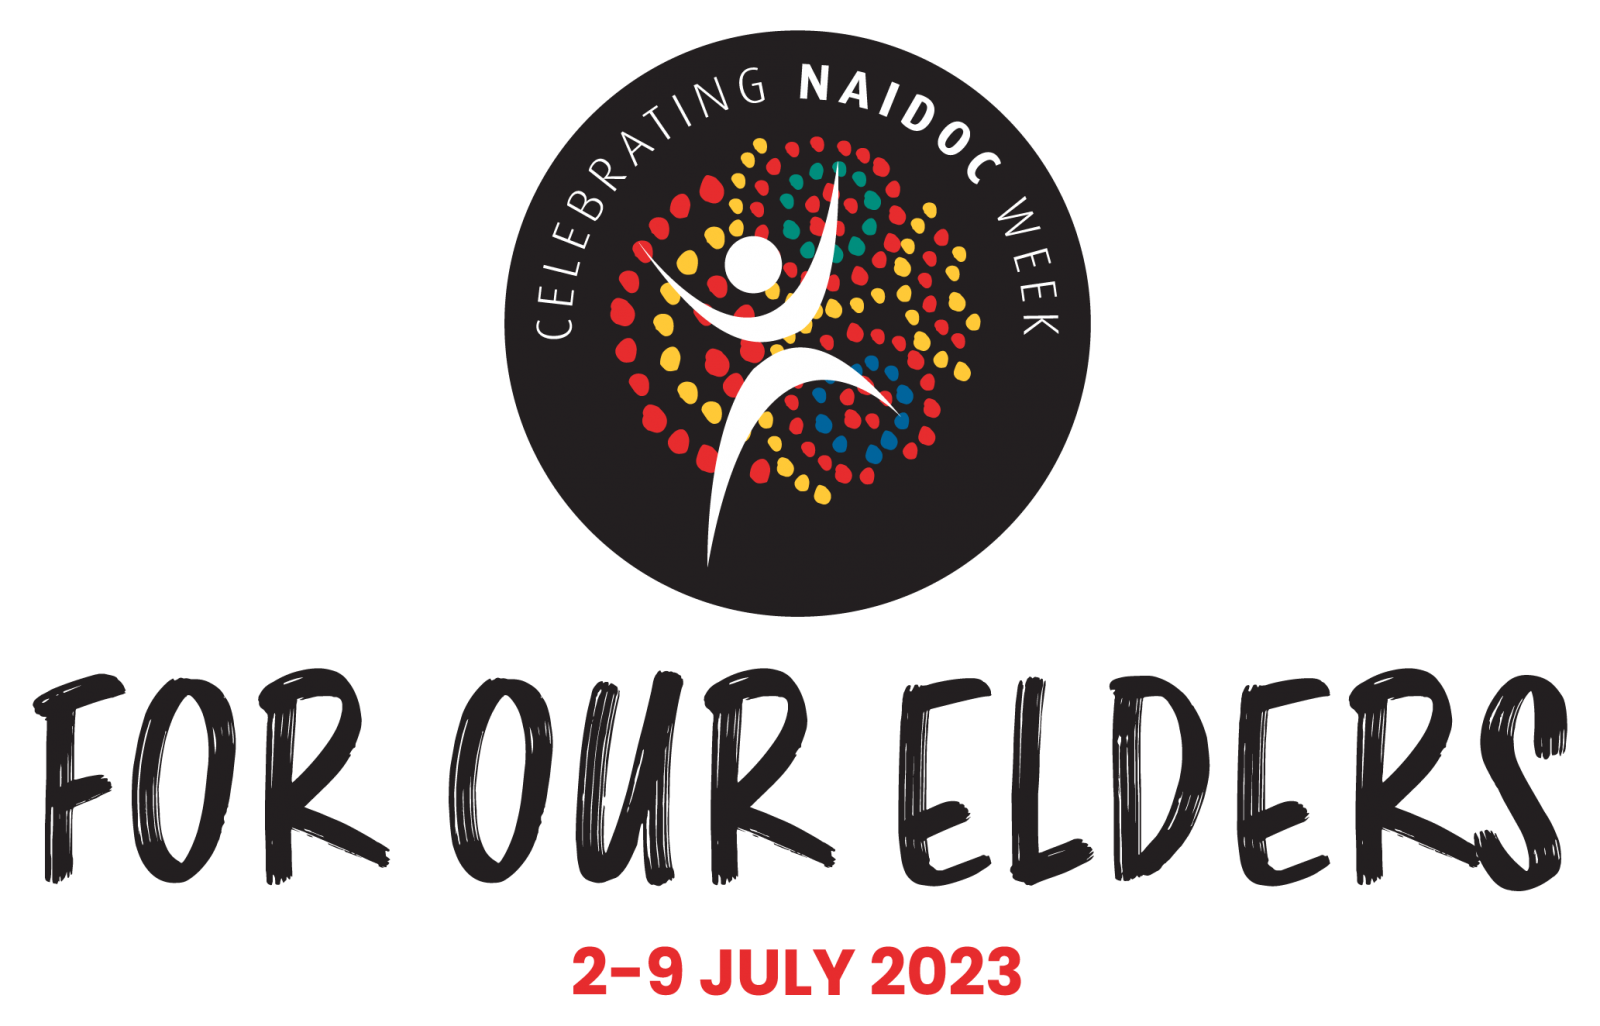 NAIDOC Week 2022 logo